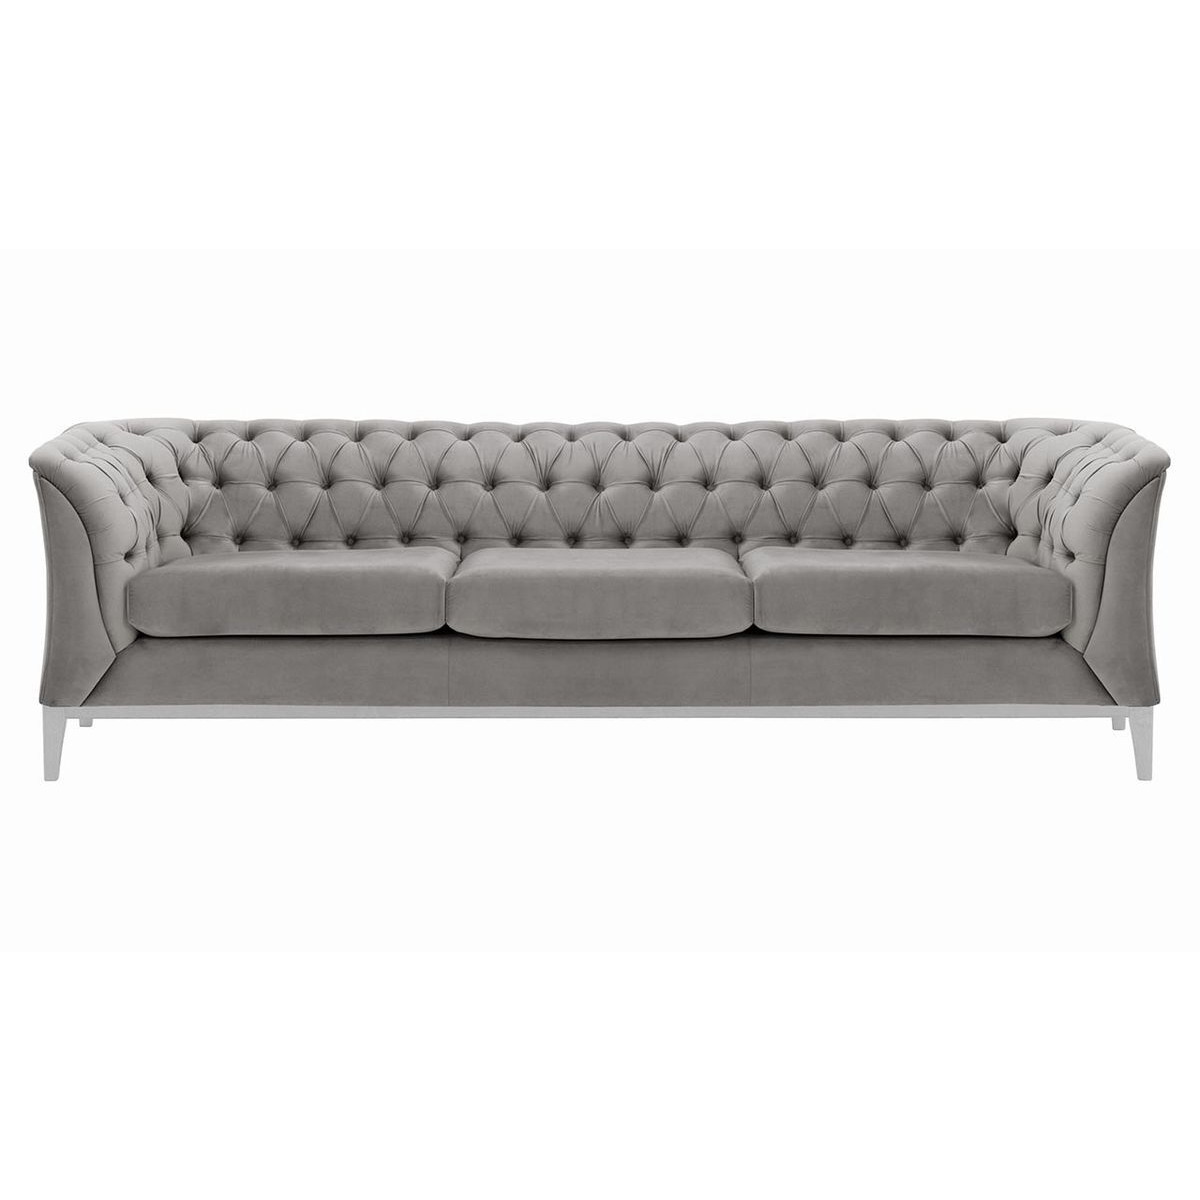 Chesterfield Modern 3 Seater Sofa Wood, silver, Leg colour: white - image 1